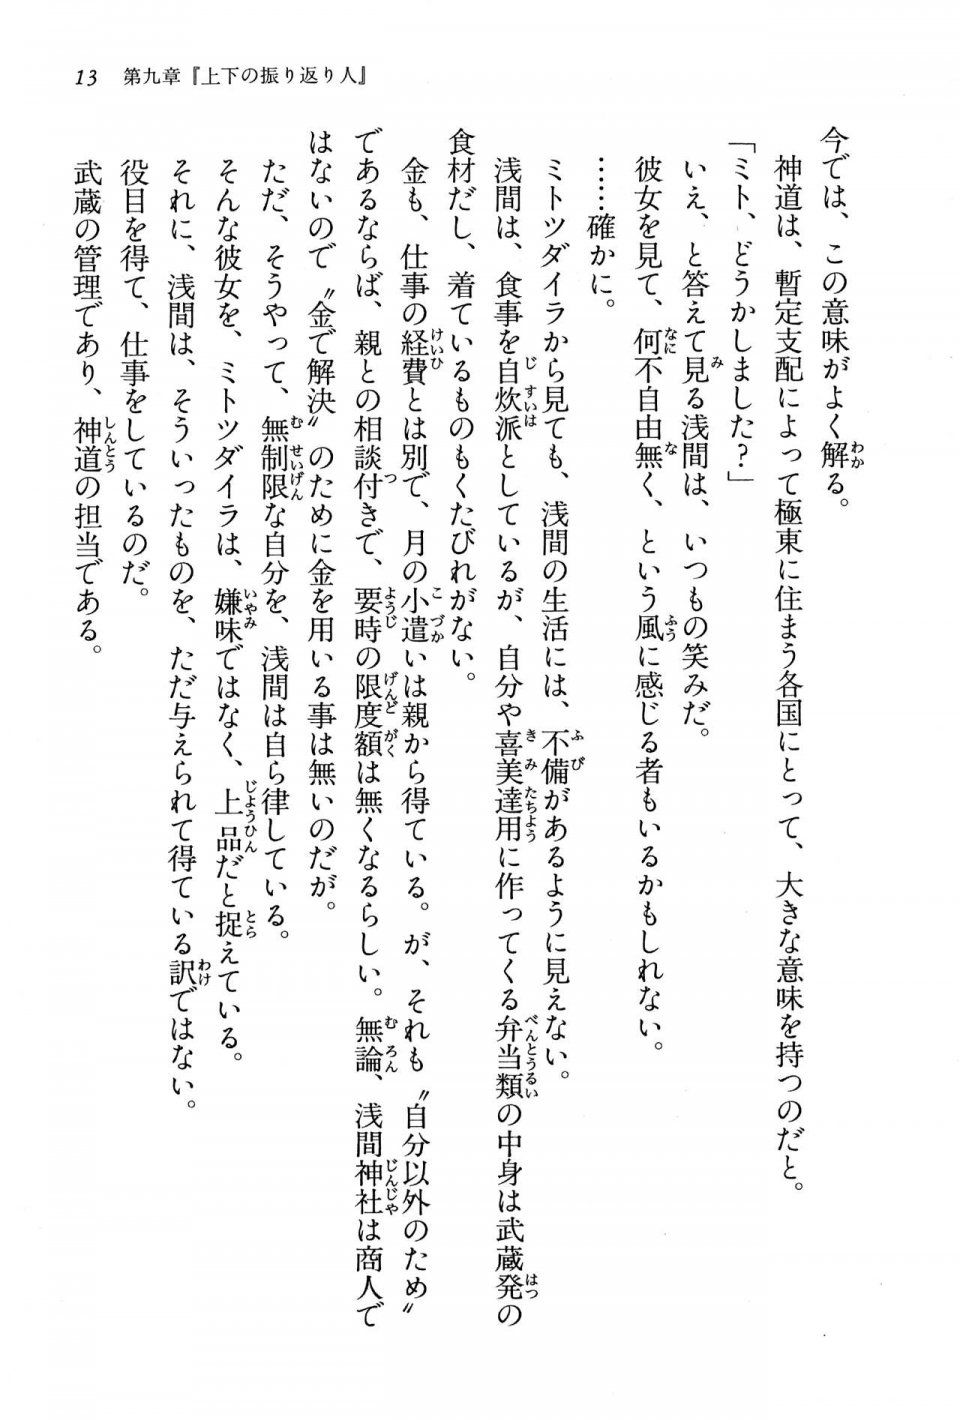 Kyoukai Senjou no Horizon BD Special Mininovel Vol 3(2A) - Photo #17